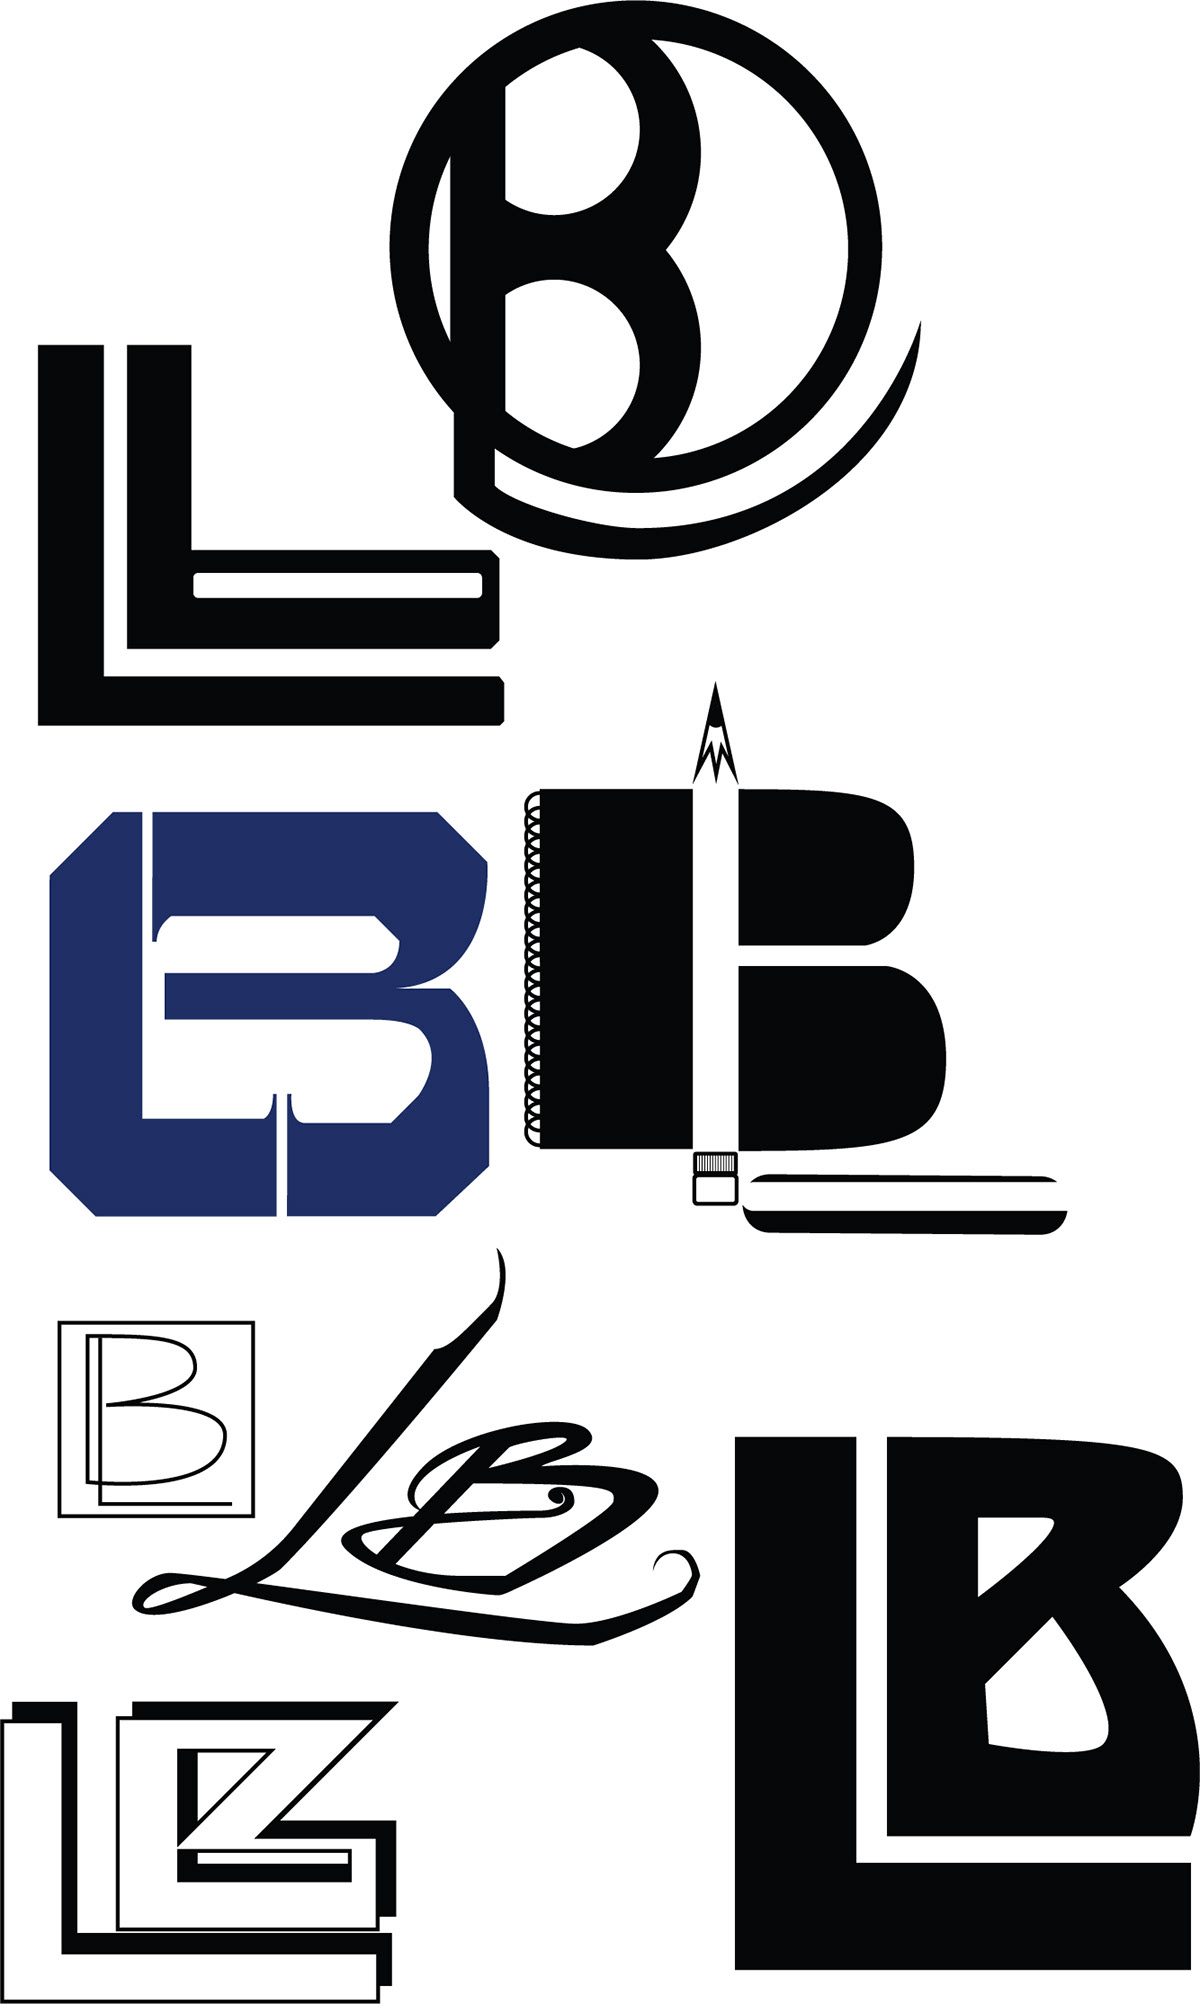 Lb logo png - Imgur